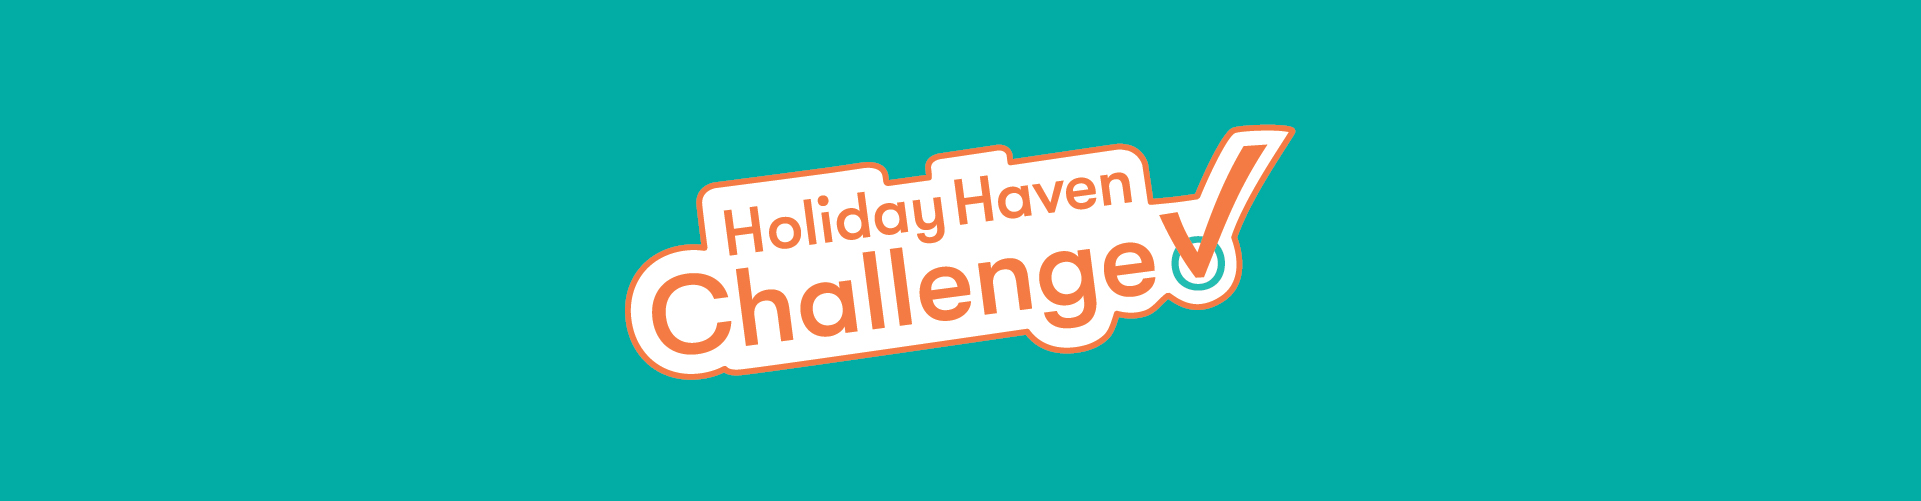 Holiday Haven Challenge